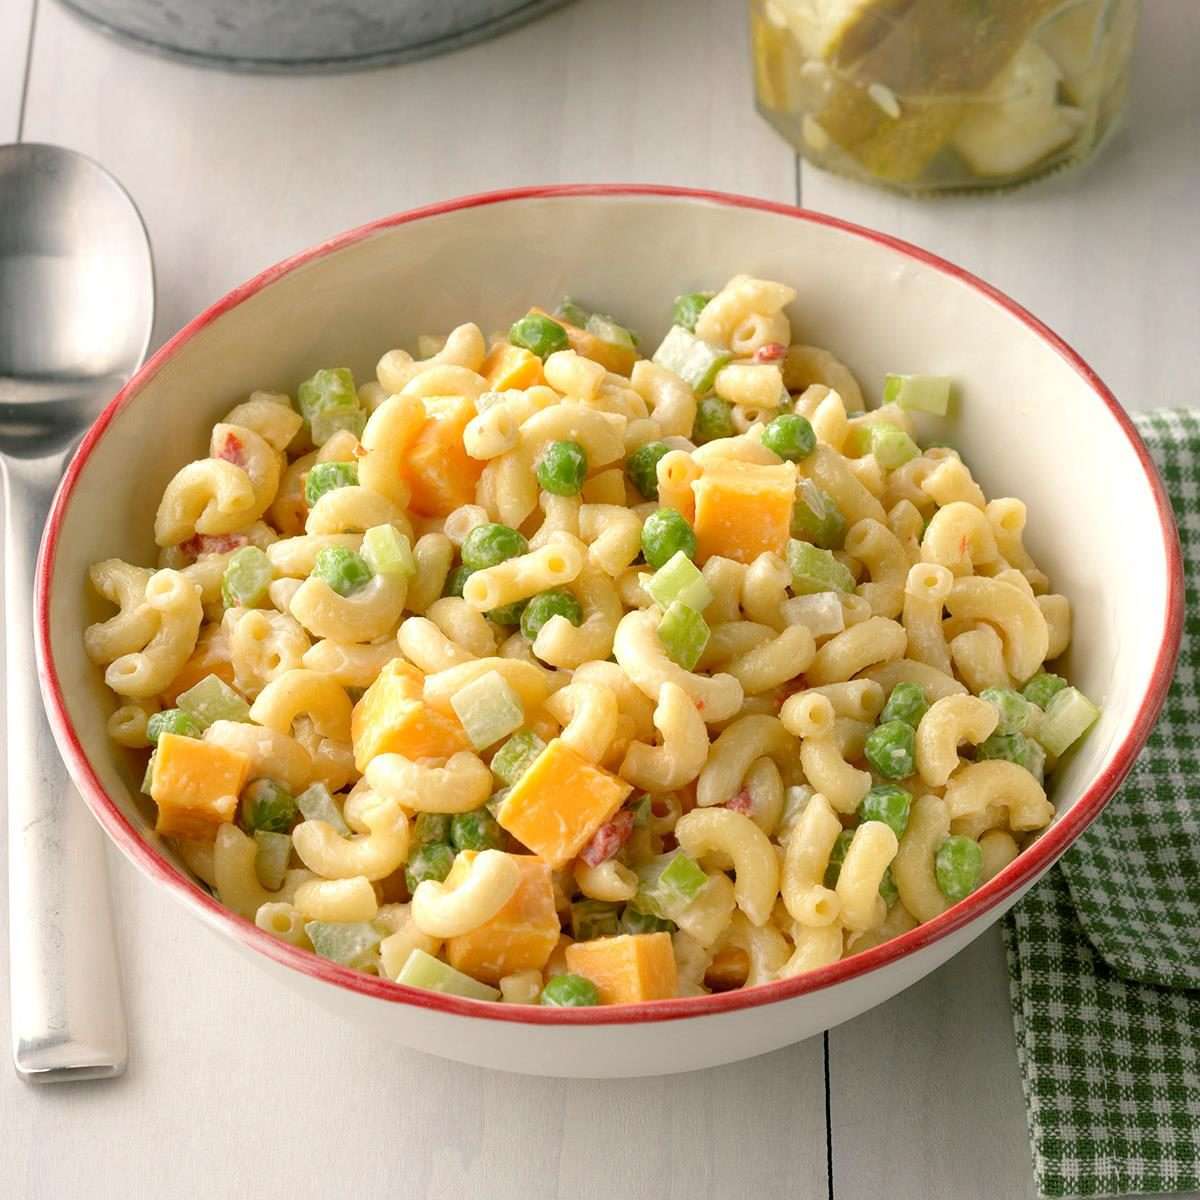 Quick Macaroni Salad Recipe: How to Make It